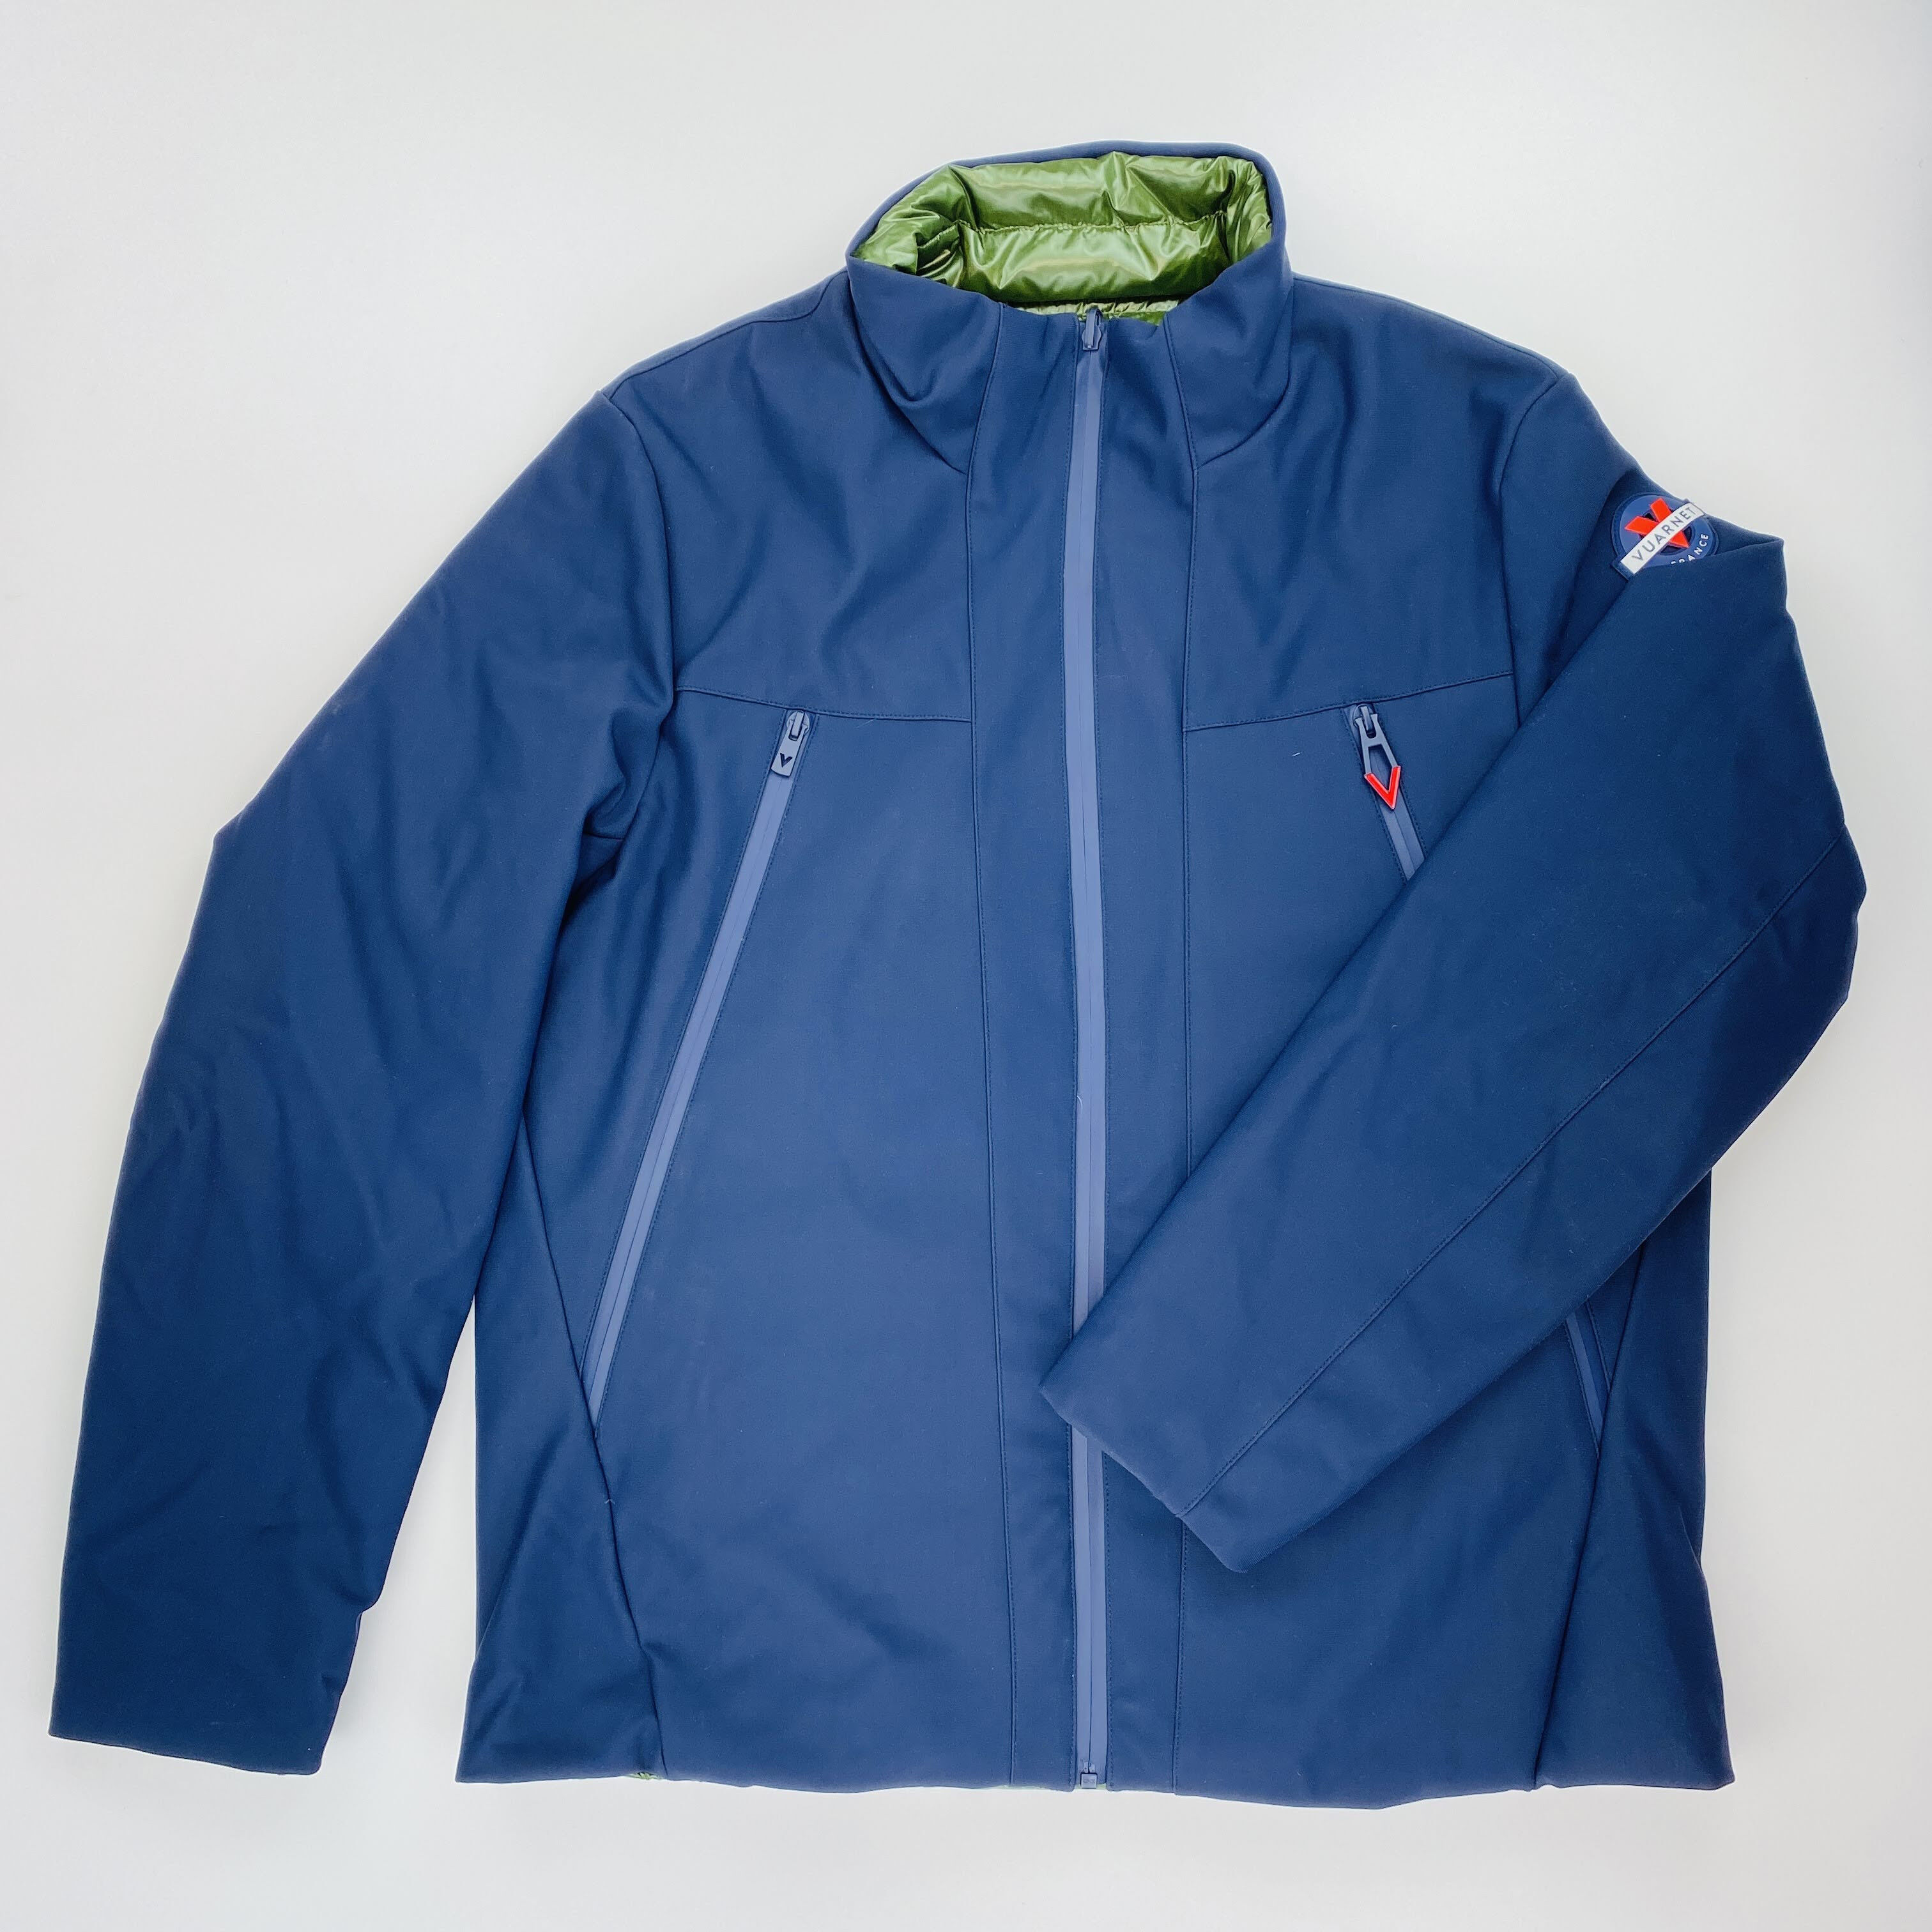 Vuarnet Lado Jacket - Seconde main Veste homme - Bleu pétrole - L | Hardloop